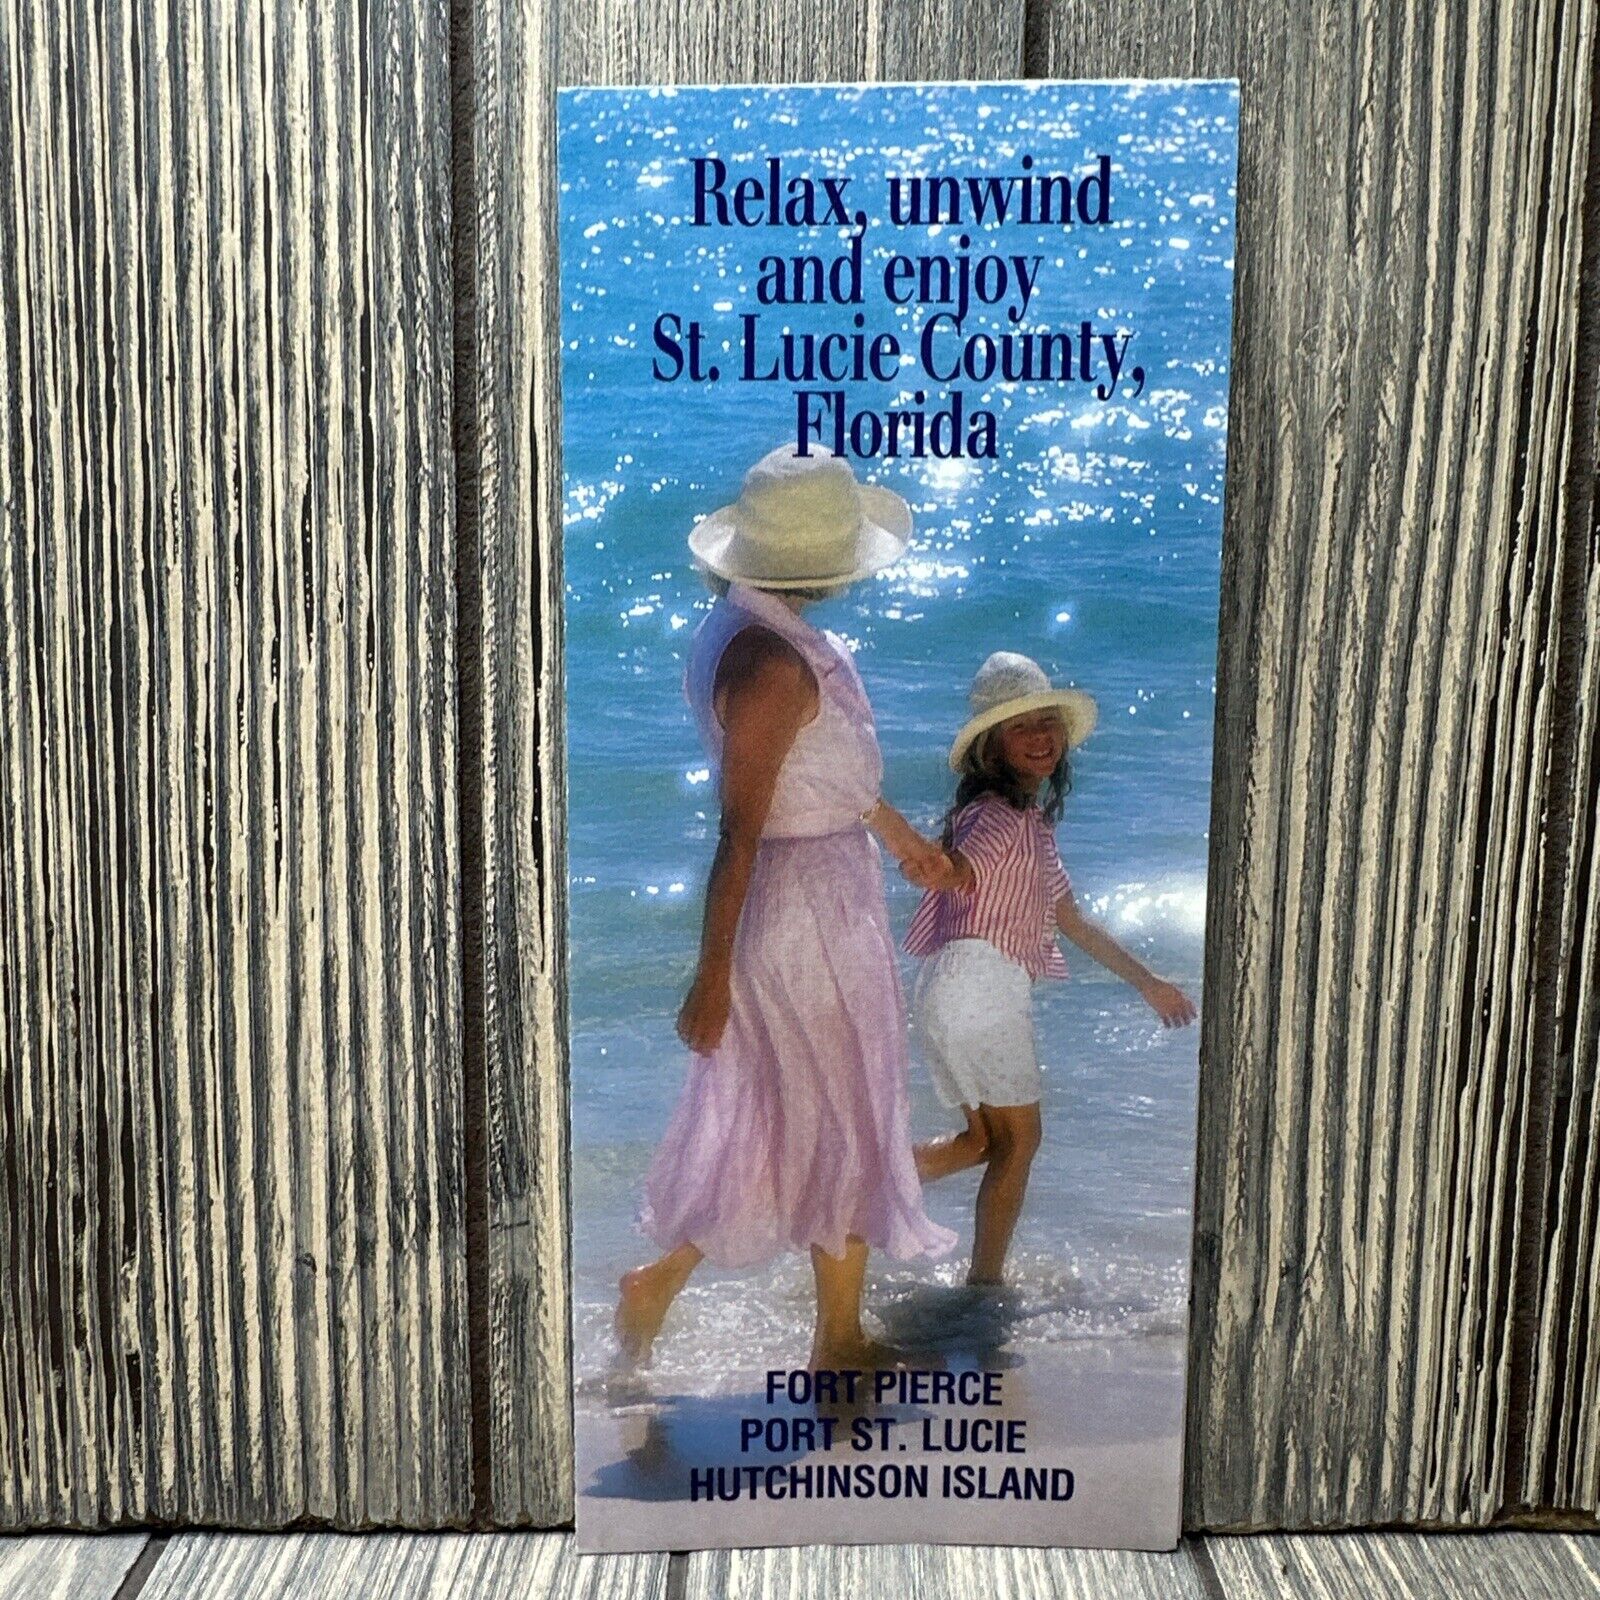 Vintage St Lucie County Florida Brochure